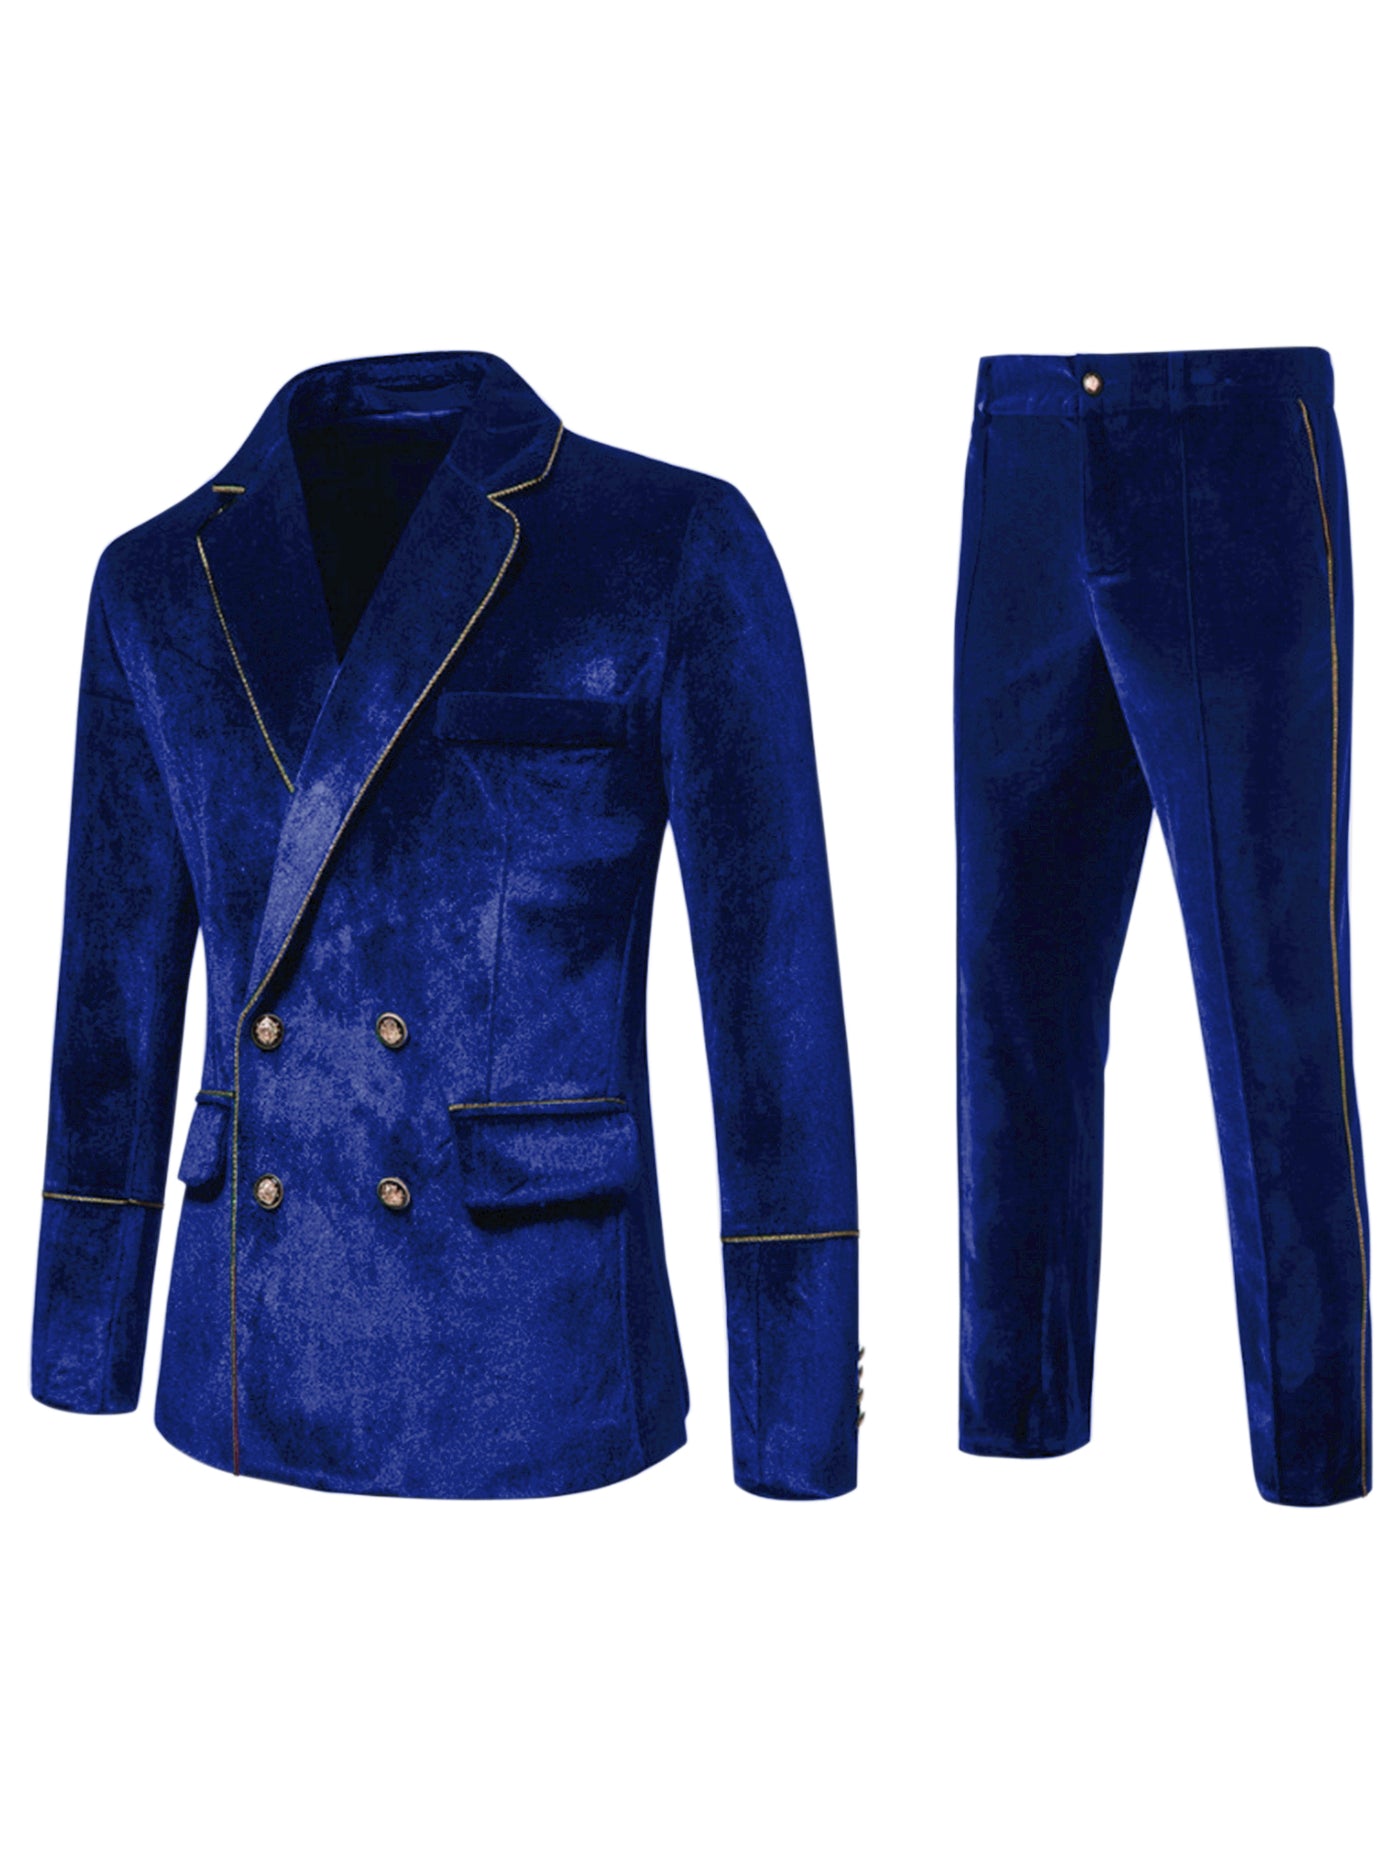 Bublédon Velvet Blazer for Men's 2 Pieces Suits Set Double Breasted Sports Coats and Dress Pants